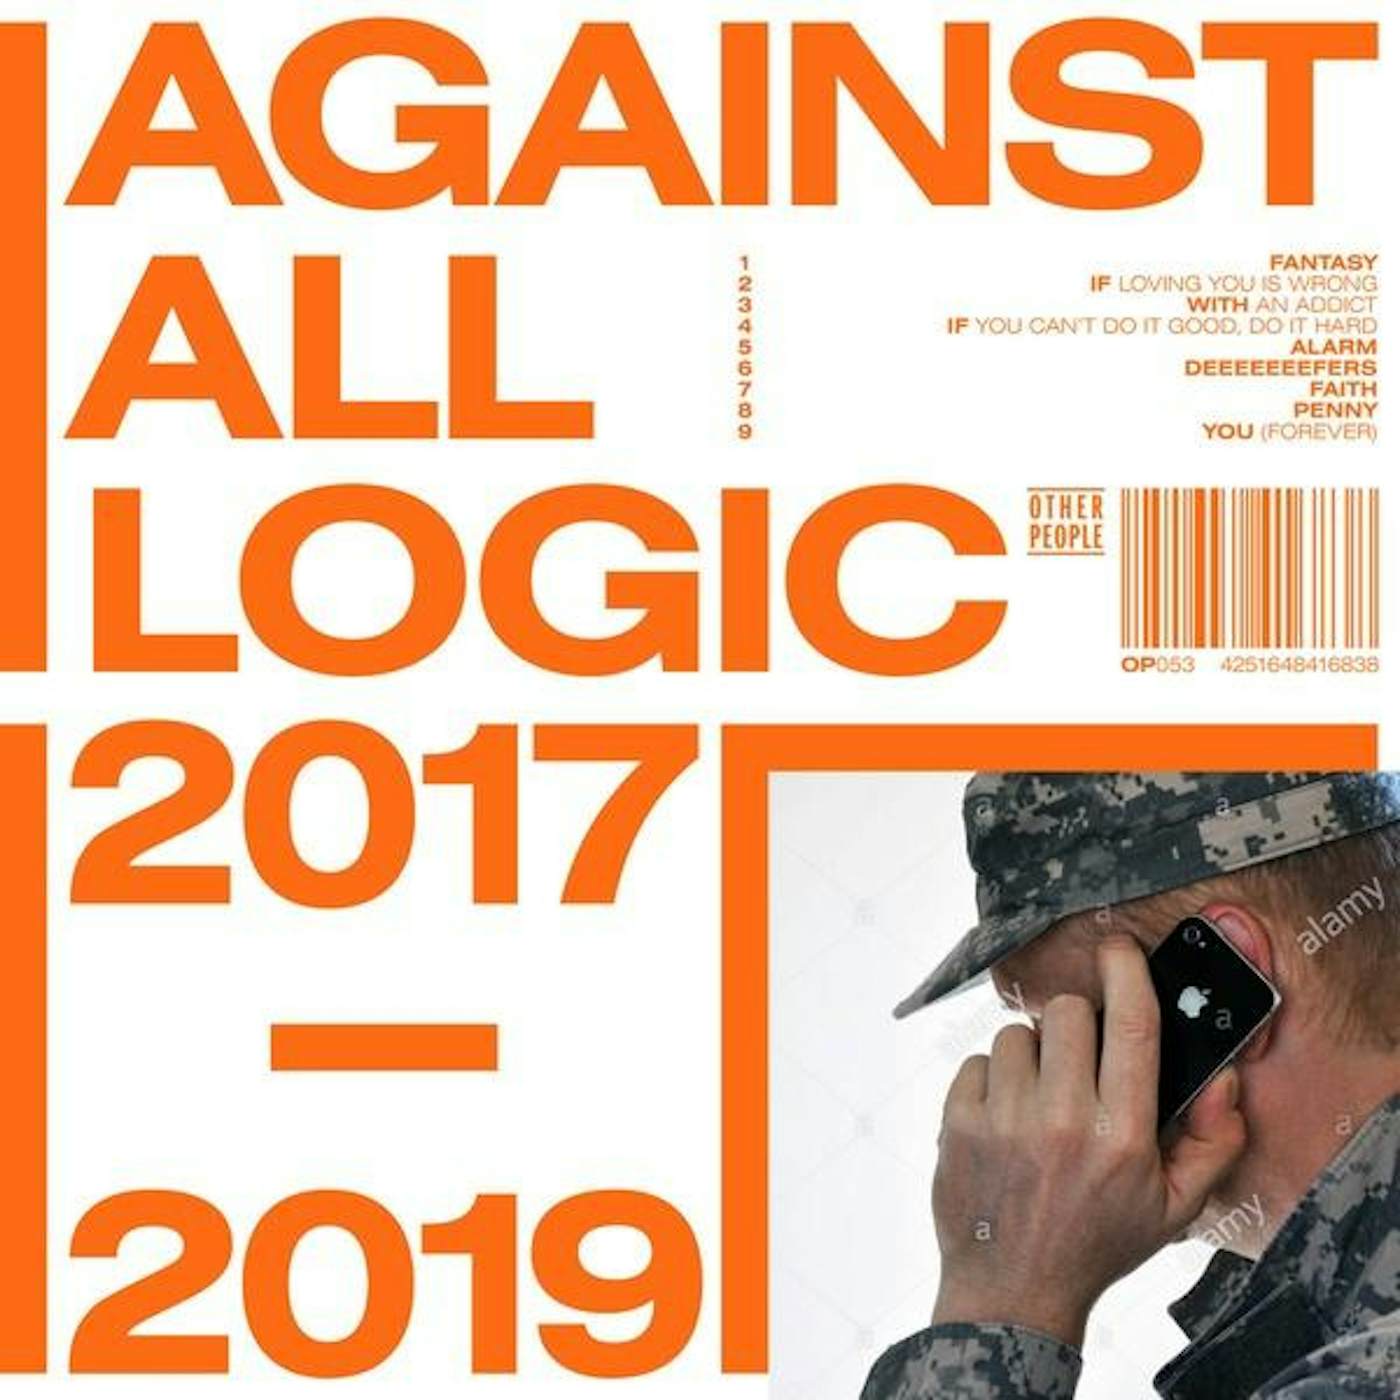 Against All Logic 2017-2019 Vinyl Record